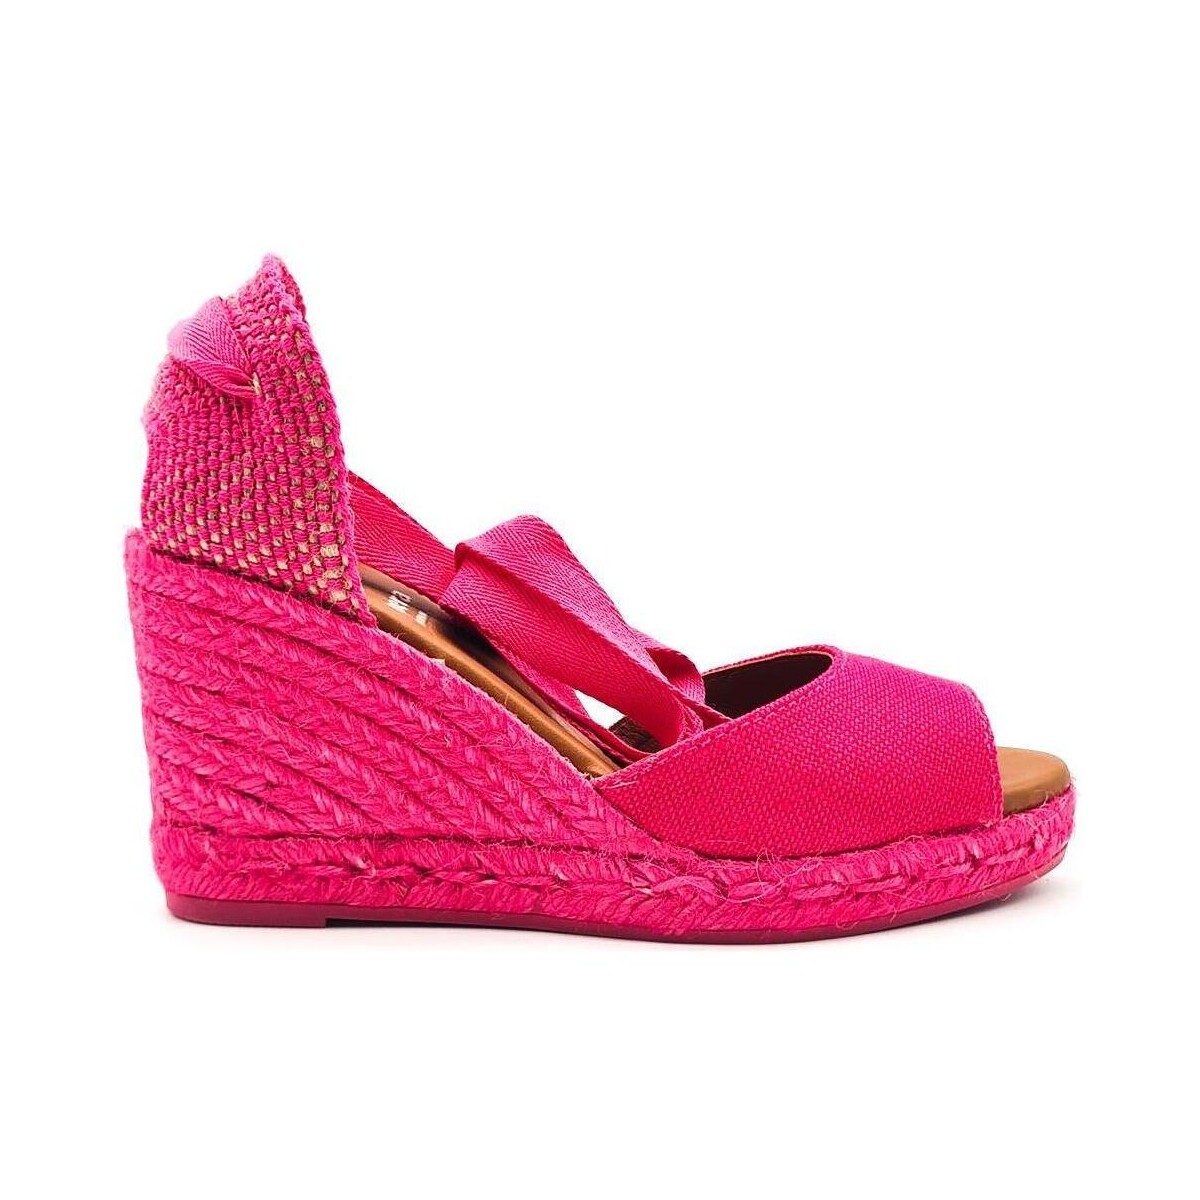 Zapatos Mujer Sandalias Viguera 2133 Rosa